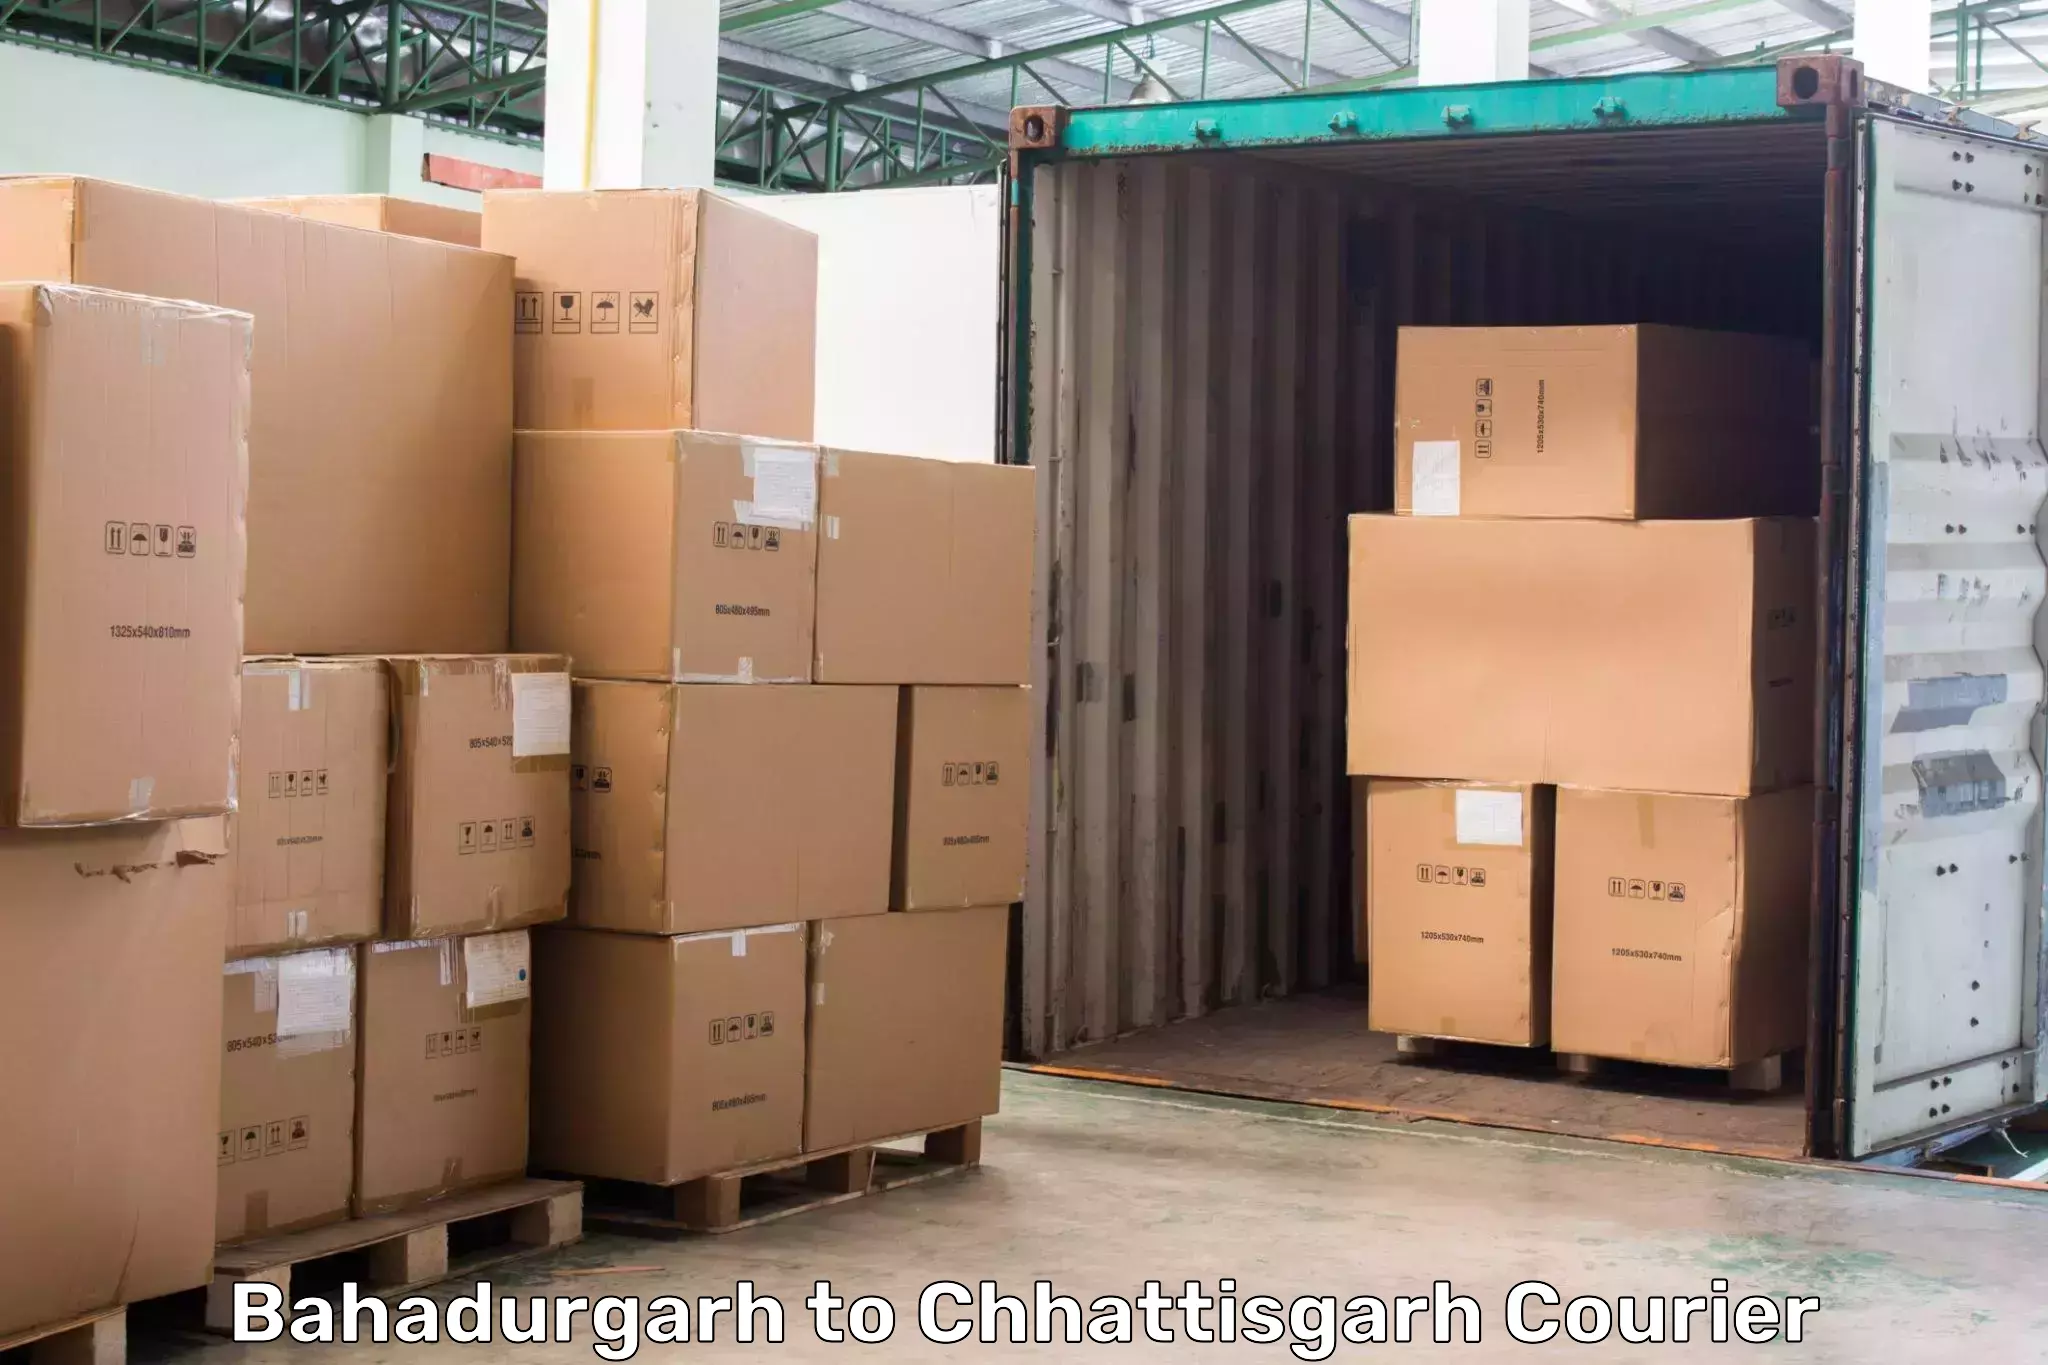 Courier service comparison Bahadurgarh to keshkal